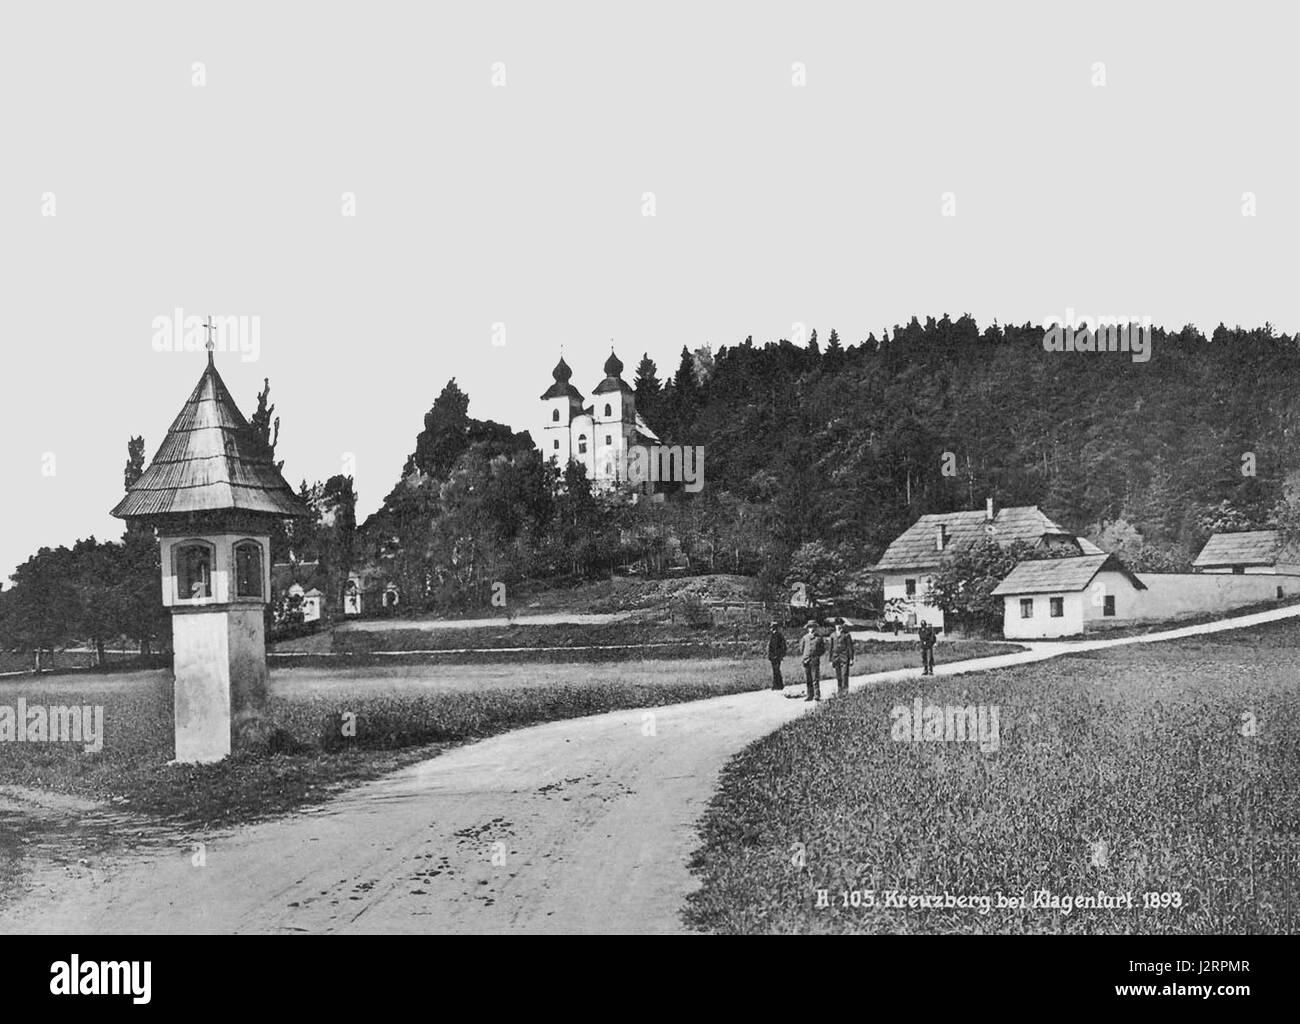 01 Kreuzbergl Bildstock und Einsiedler 1893 Verlag F Kleinmayr Stock Photo